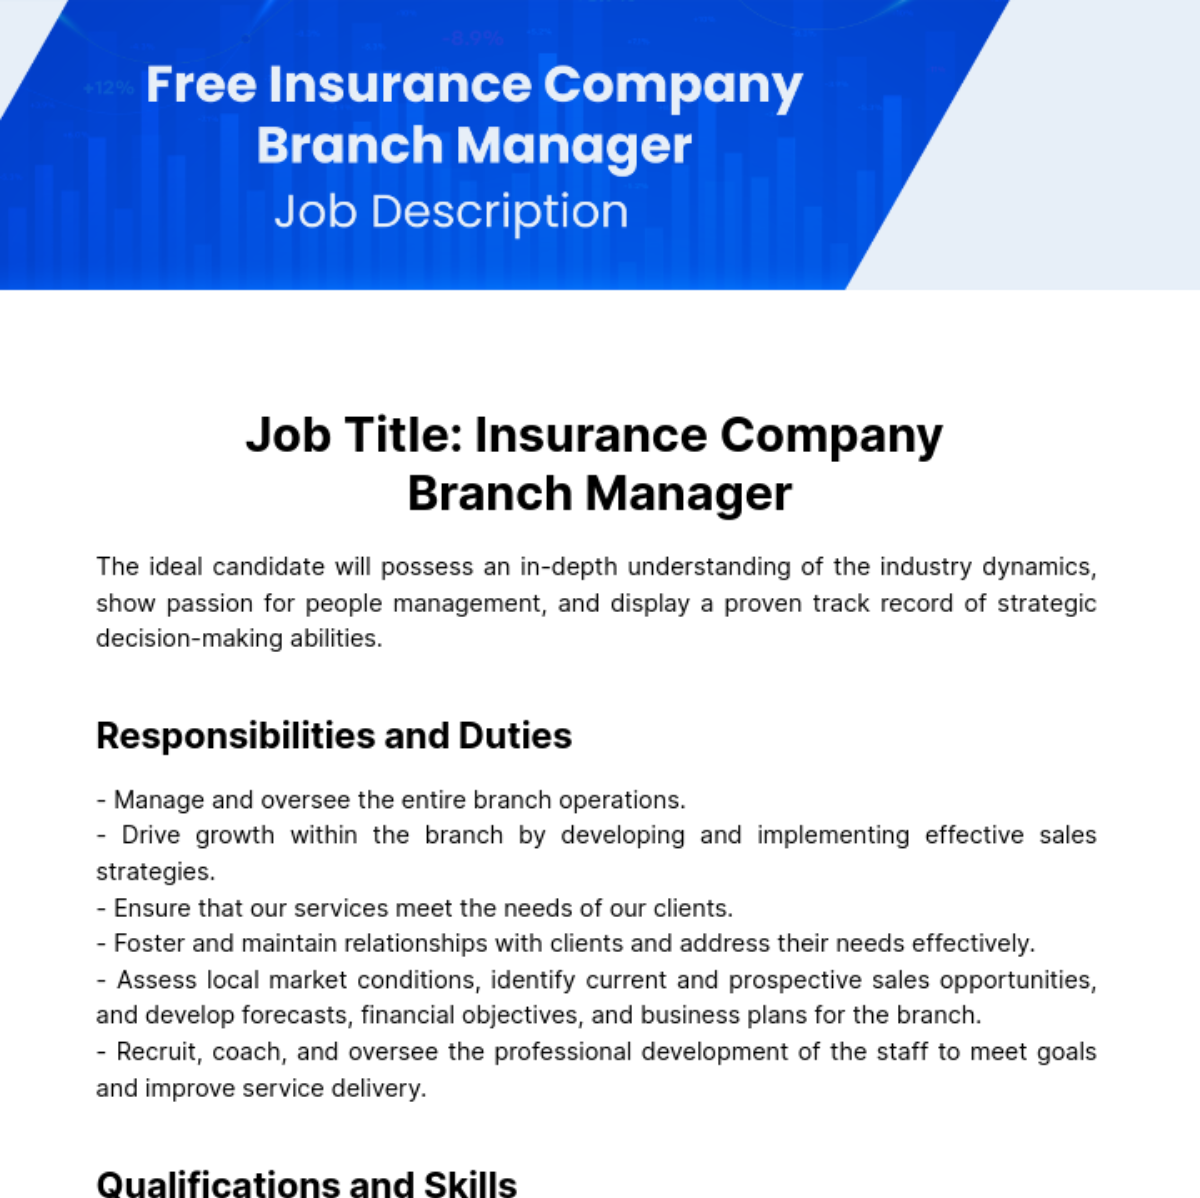 Free Insurance Company Branch Manager Job Description Template